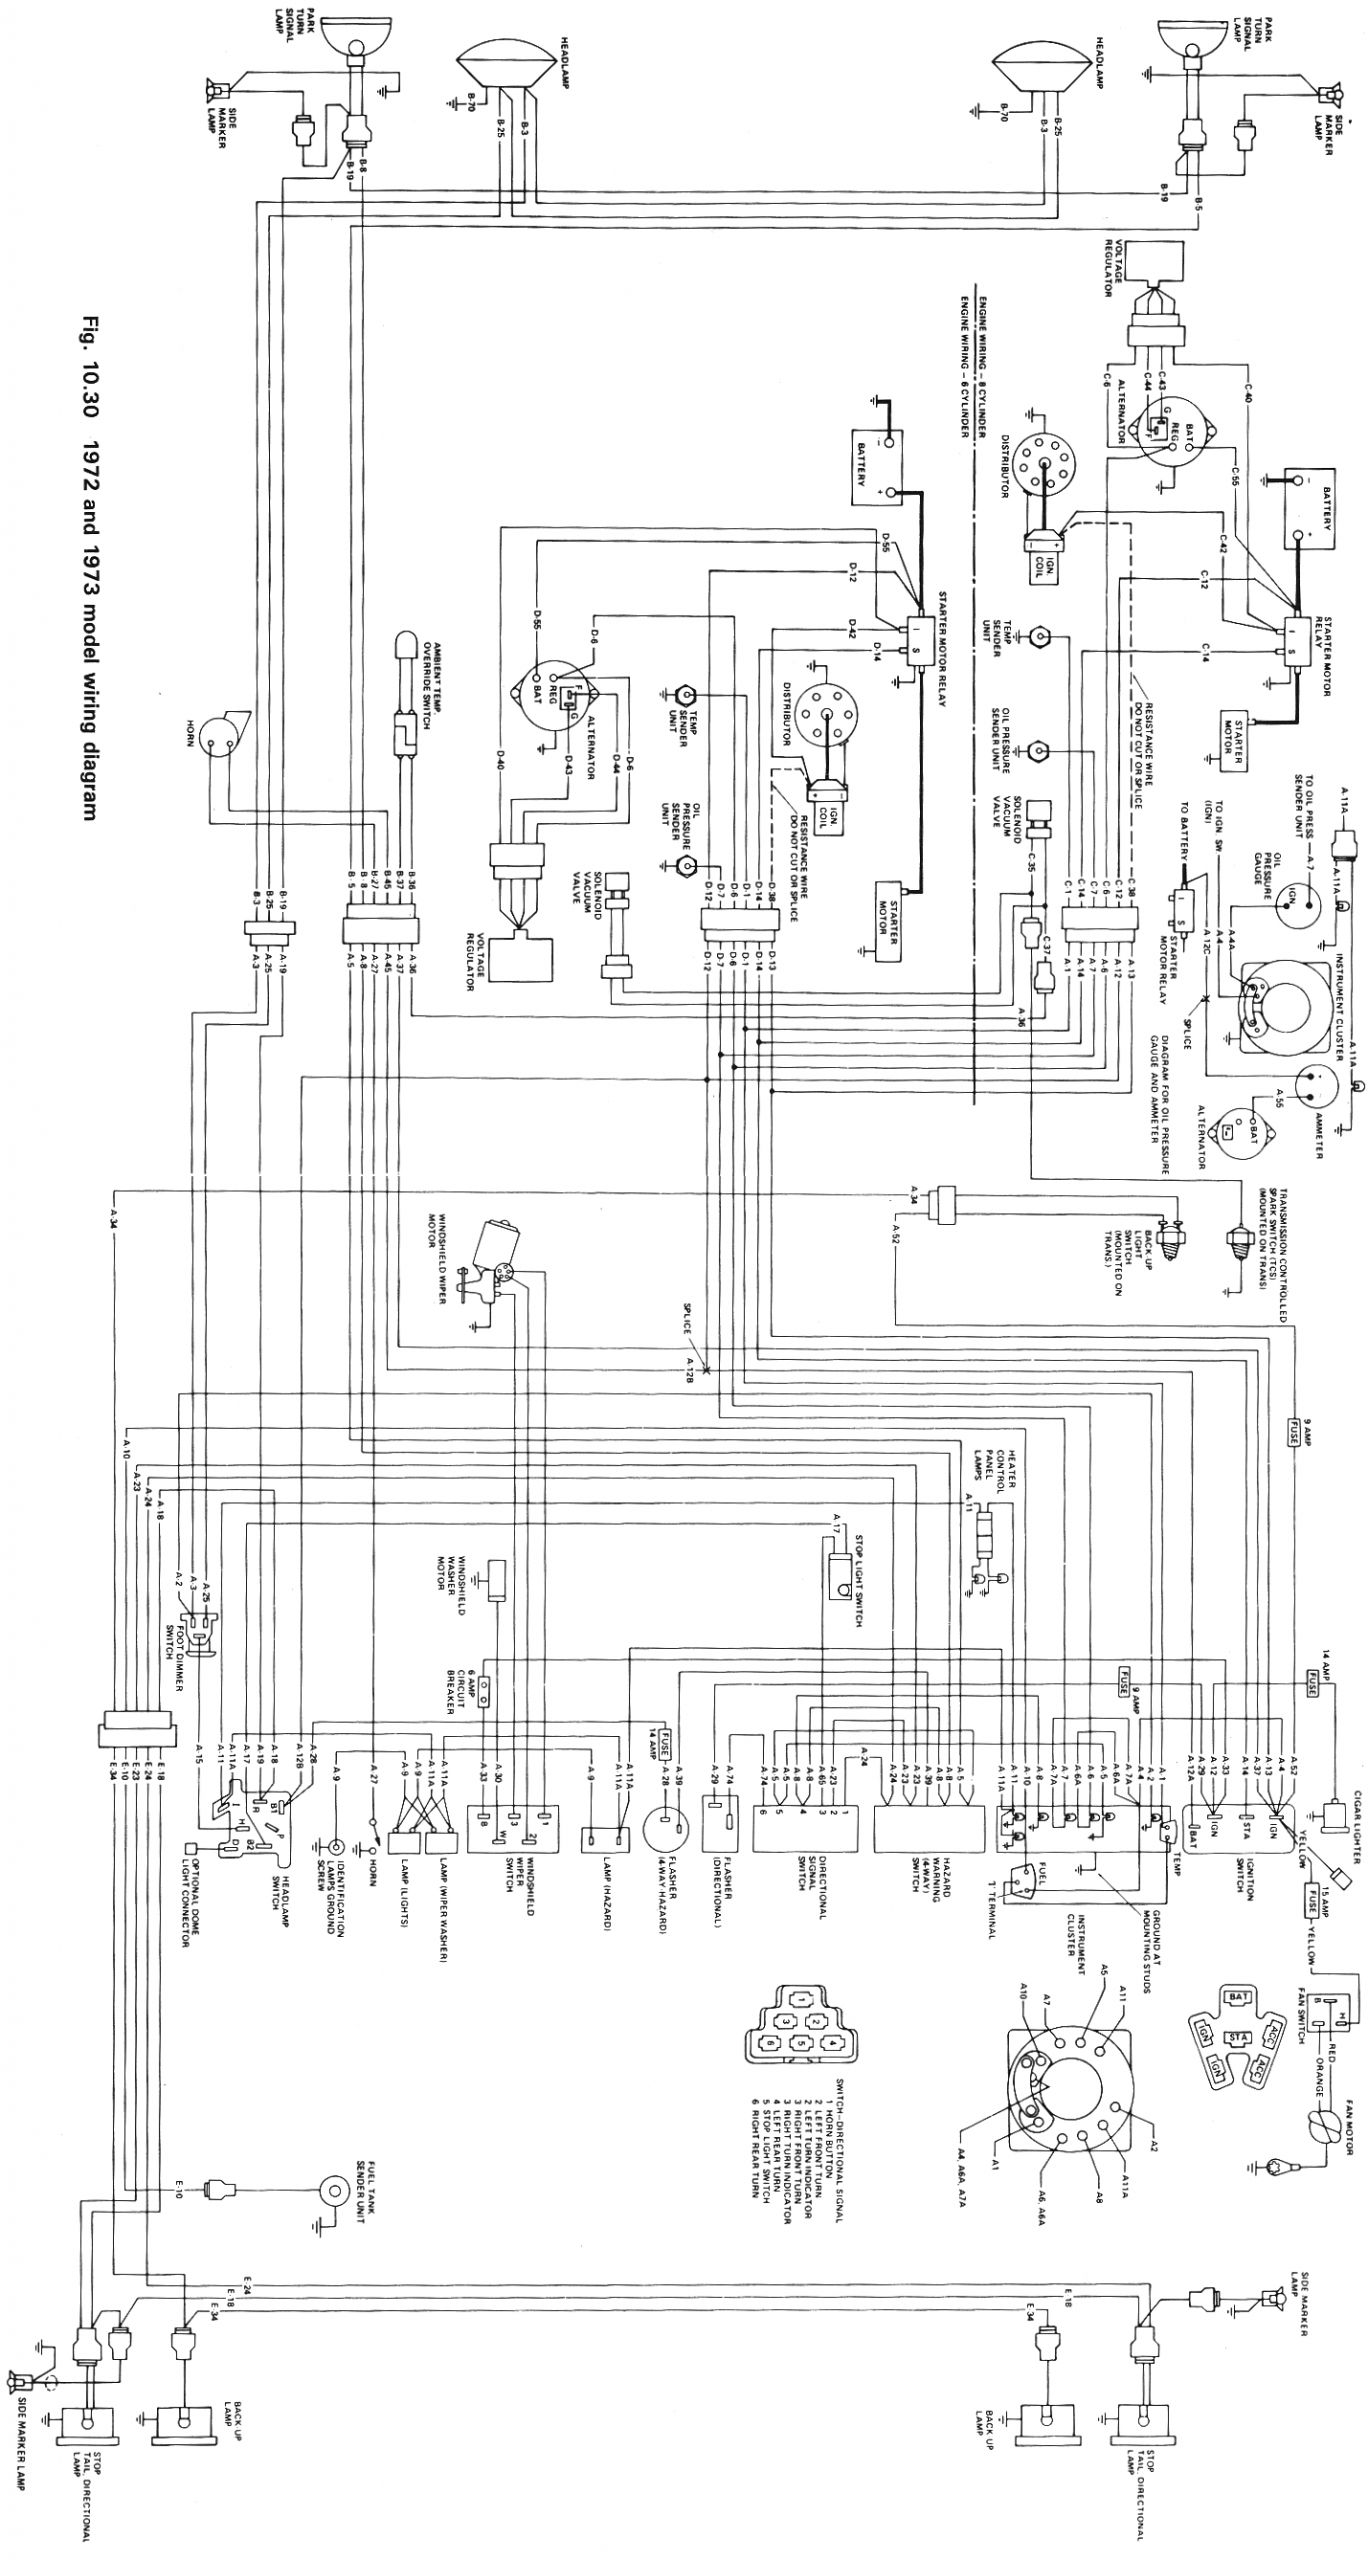 wiring diagram jeep cj 72 73 electrical schematic gif